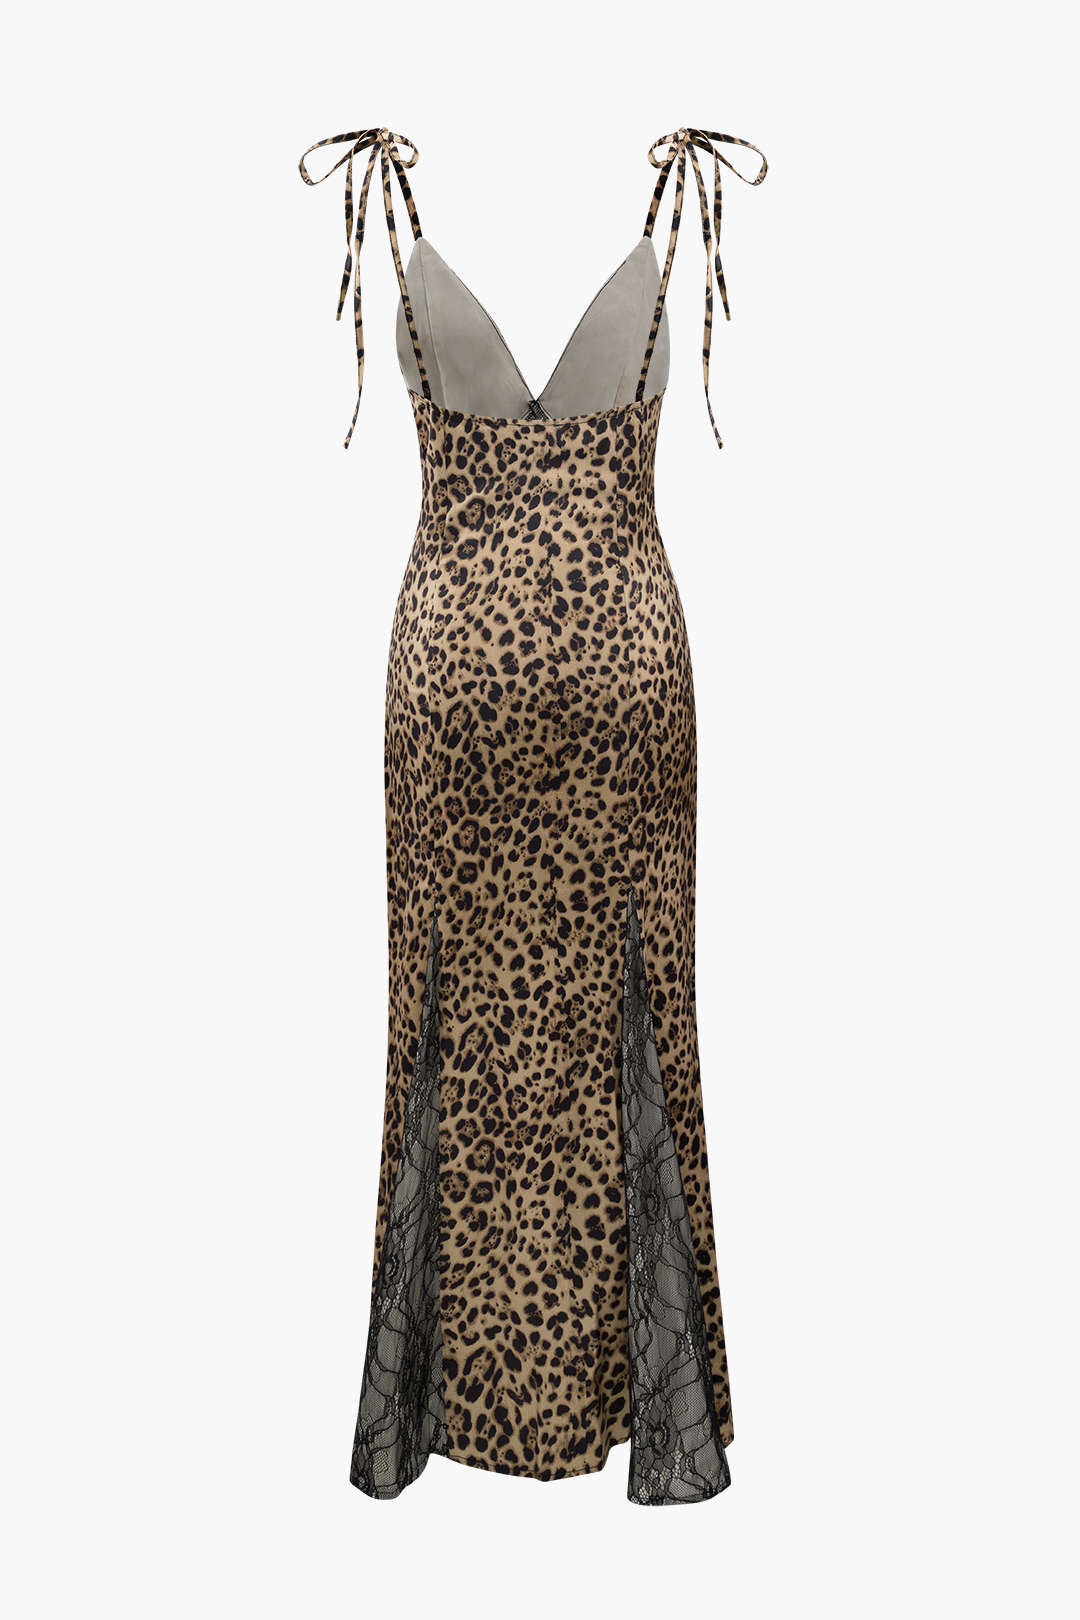 Lace Detail Leopard Print Maxi Dress